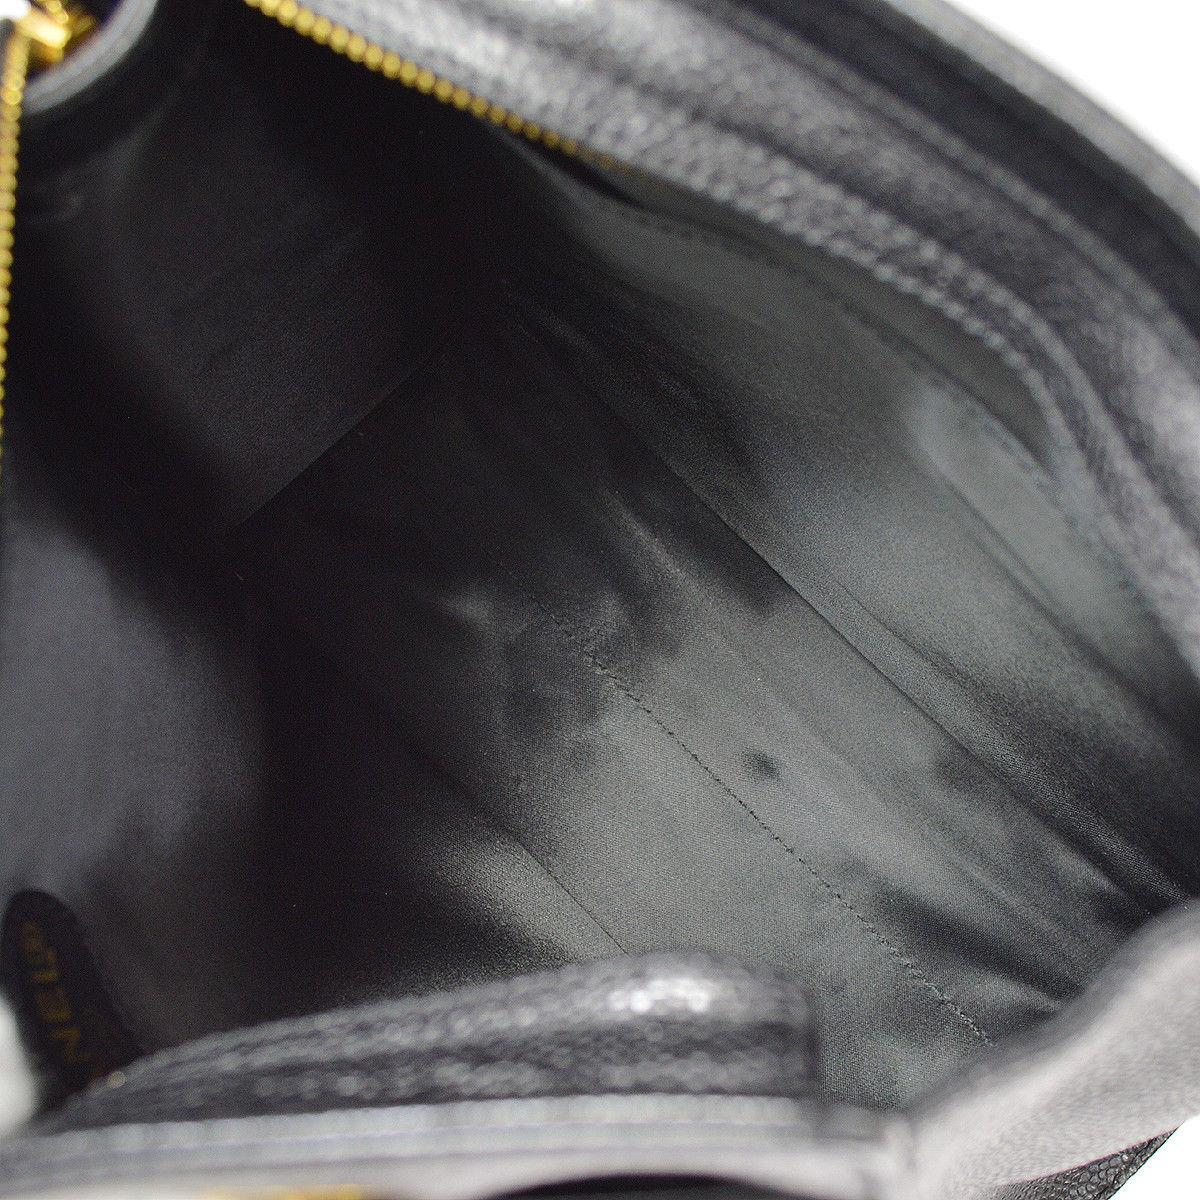 Chanel Black Caviar Leather Zip Carryall Travel Shopper Shoulder Tote Bag 2